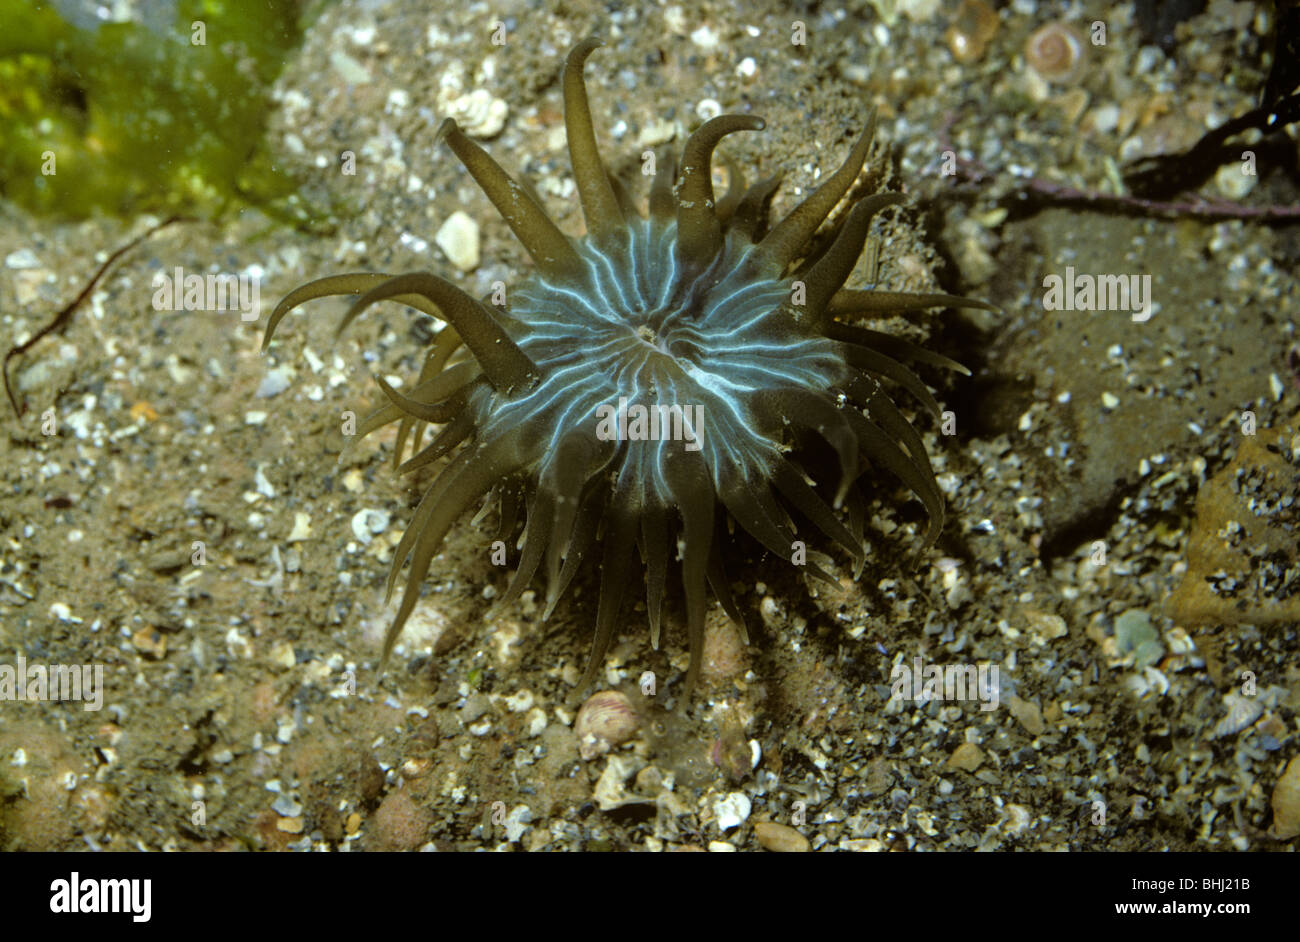 Trumpet anemone (Aiptasia mutabilis) on the lower shore UK Stock Photo